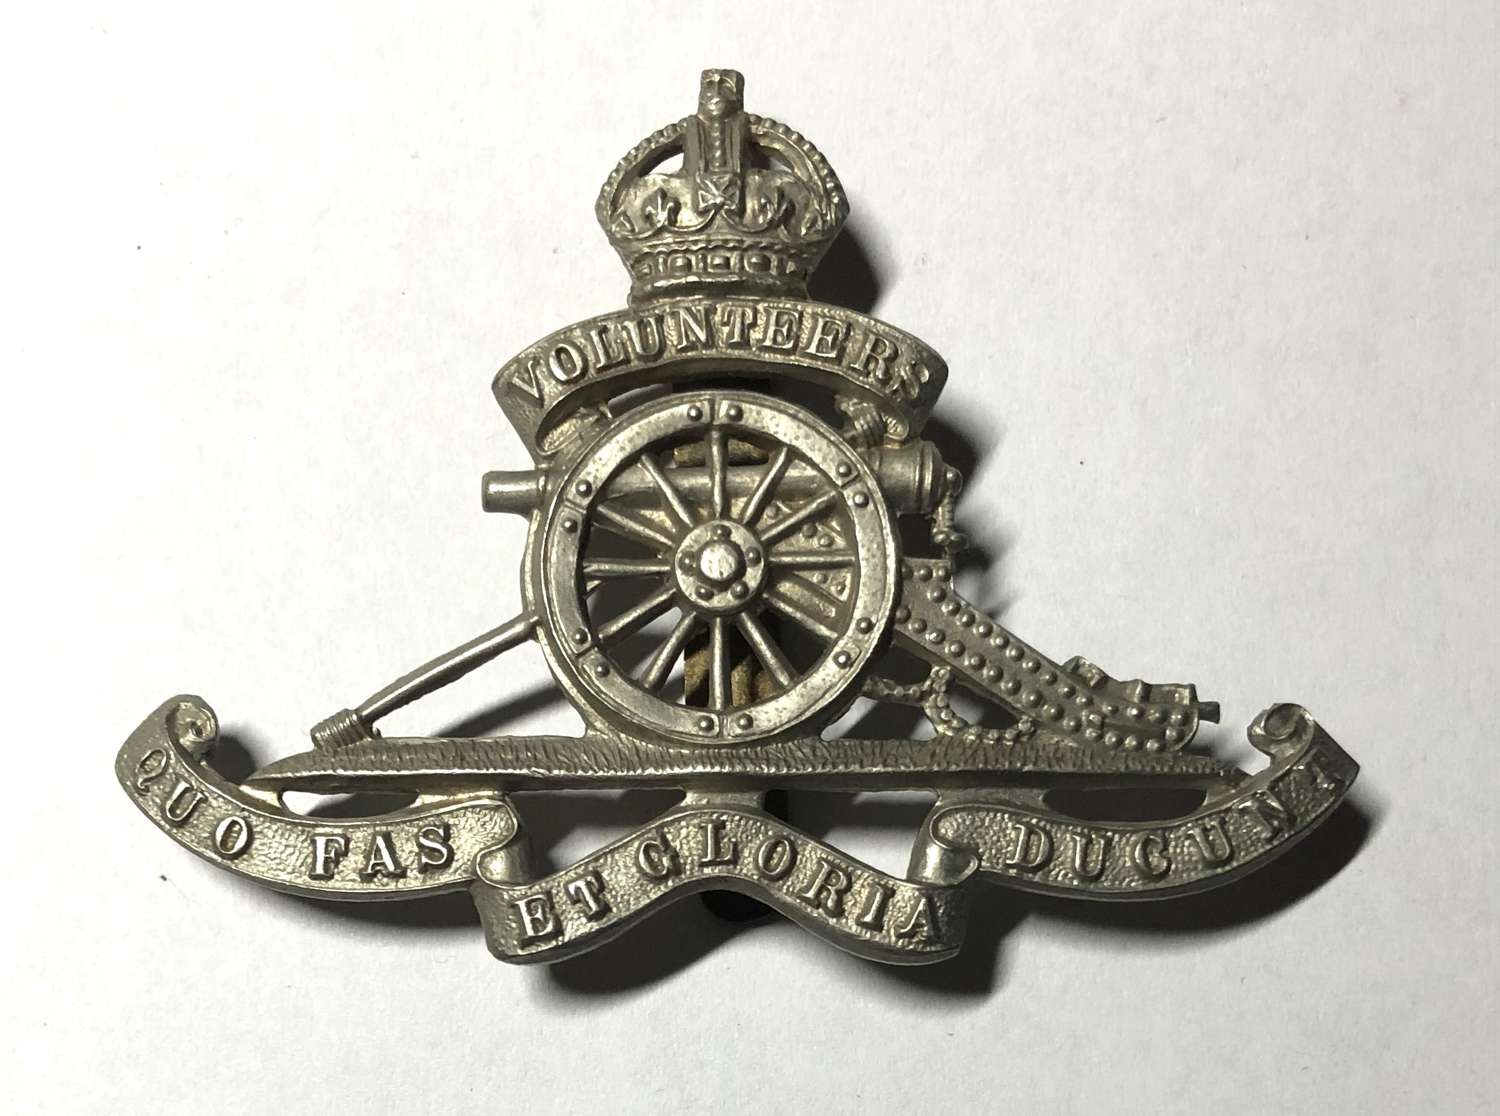 Artillery Volunteers Edwardian cap badge circa 1902-08